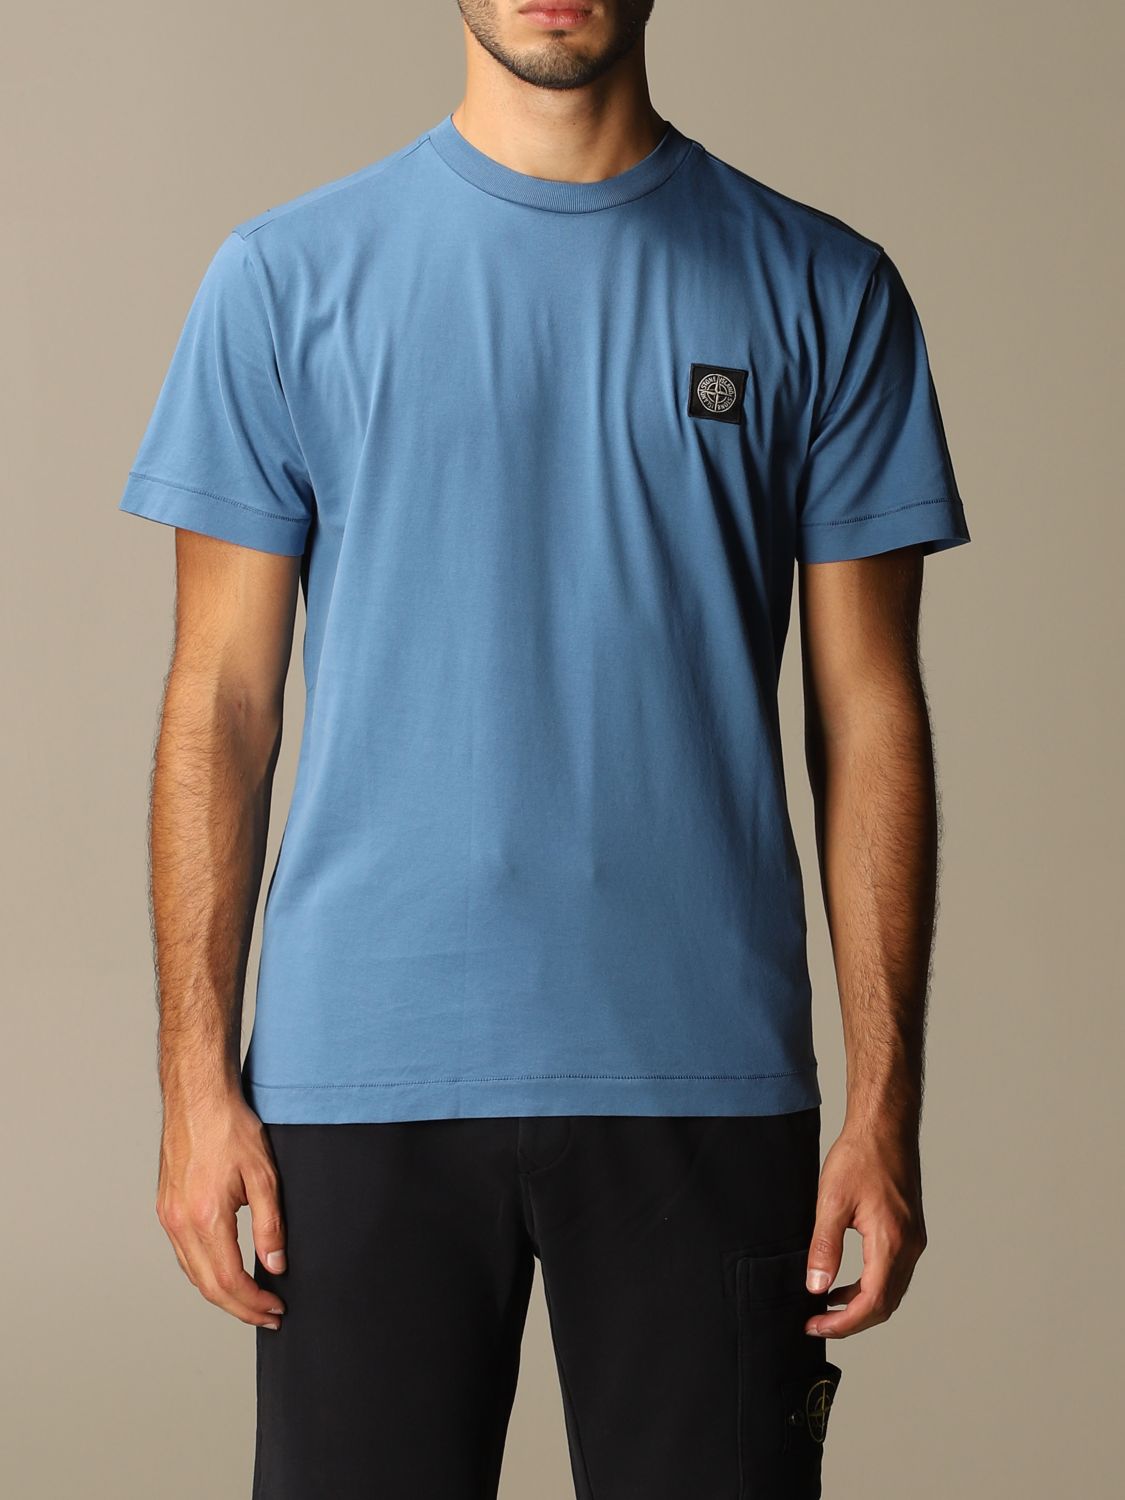 STONE ISLAND: t-shirt for men - Periwinkle | Stone Island t-shirt 24113